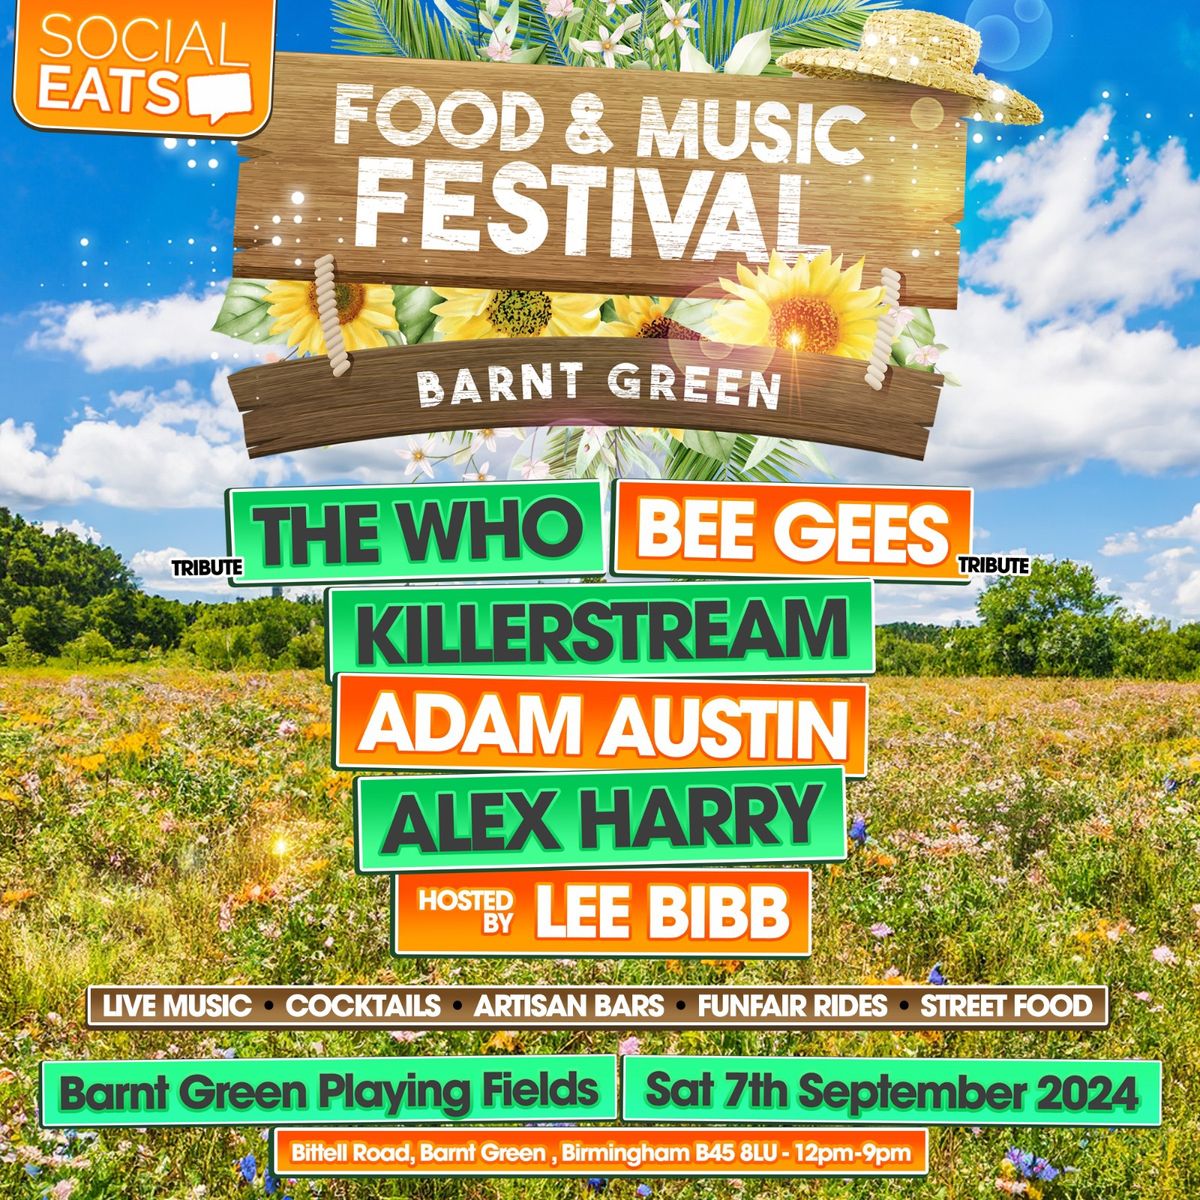 Social Eats Food & Music Festival - Barnt Green